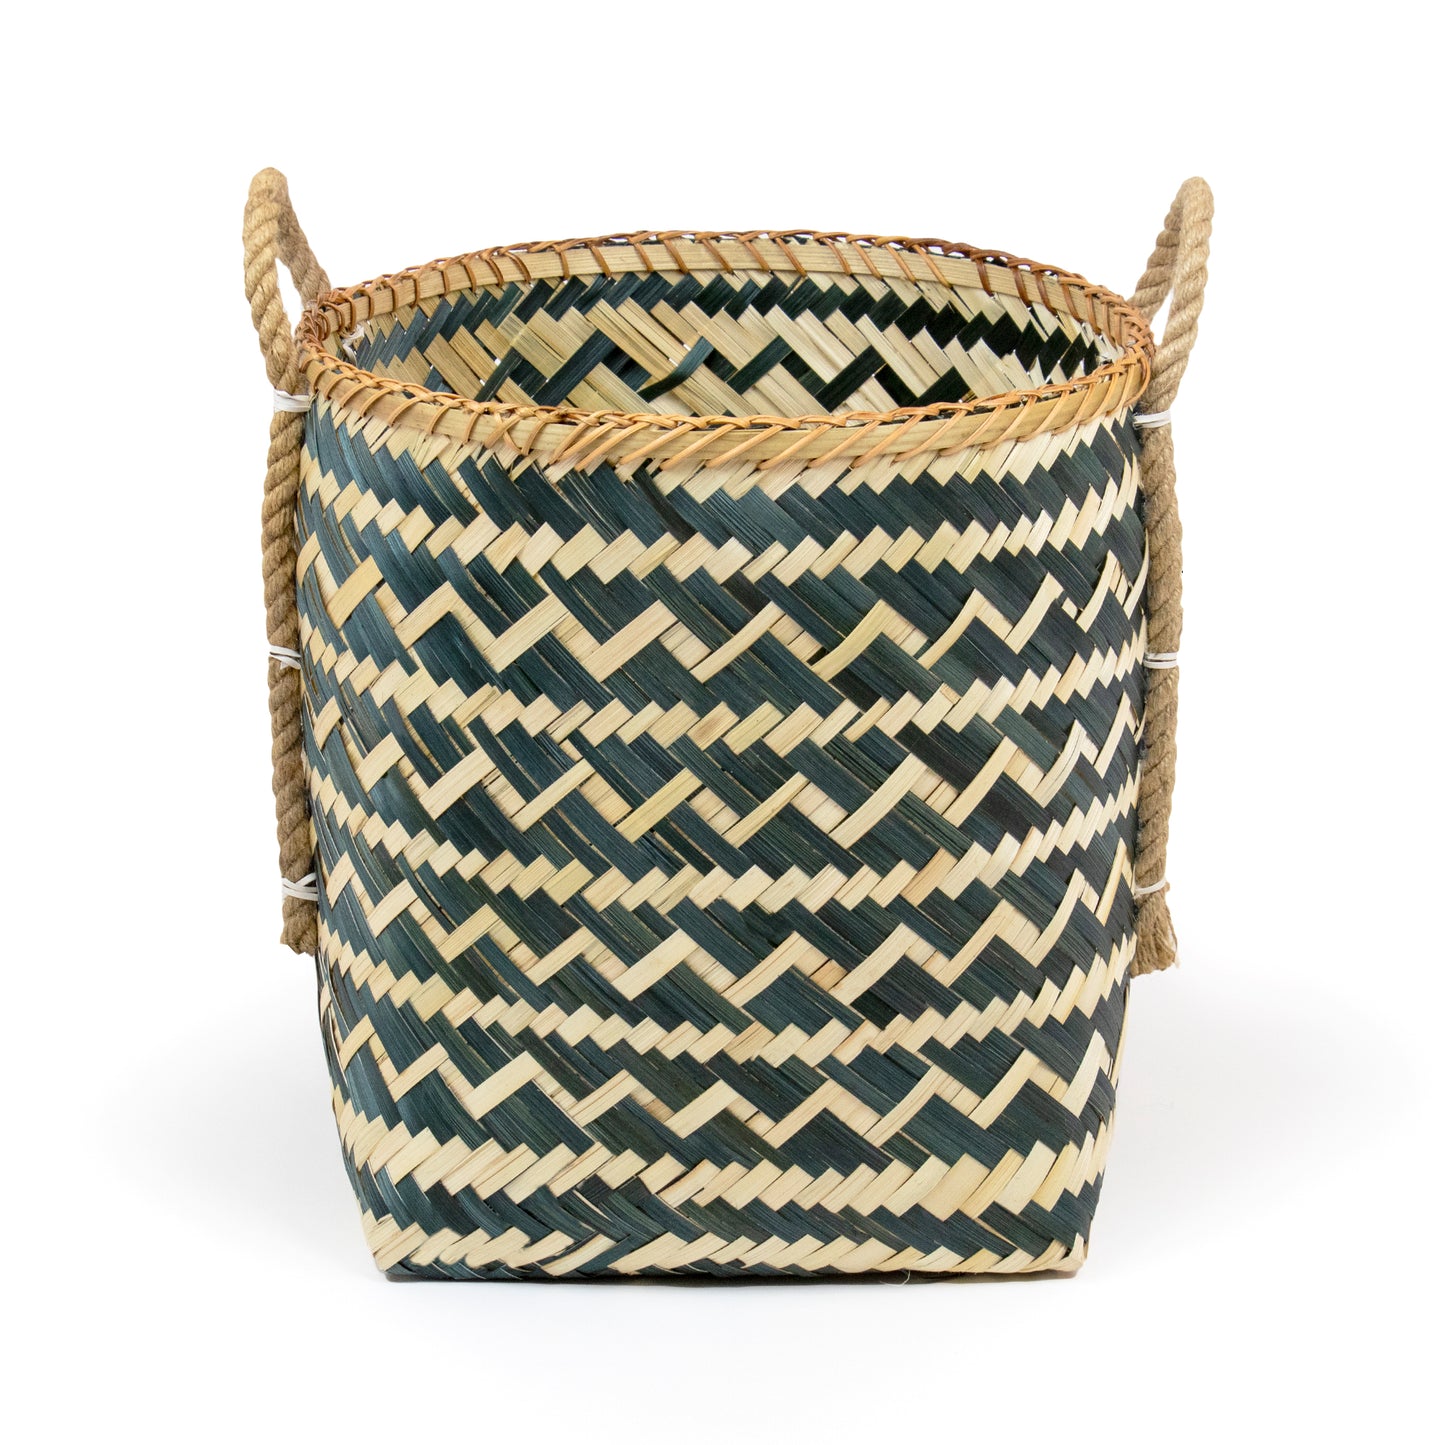 Set de 3 cestas de almacenamiento de bambú Koa